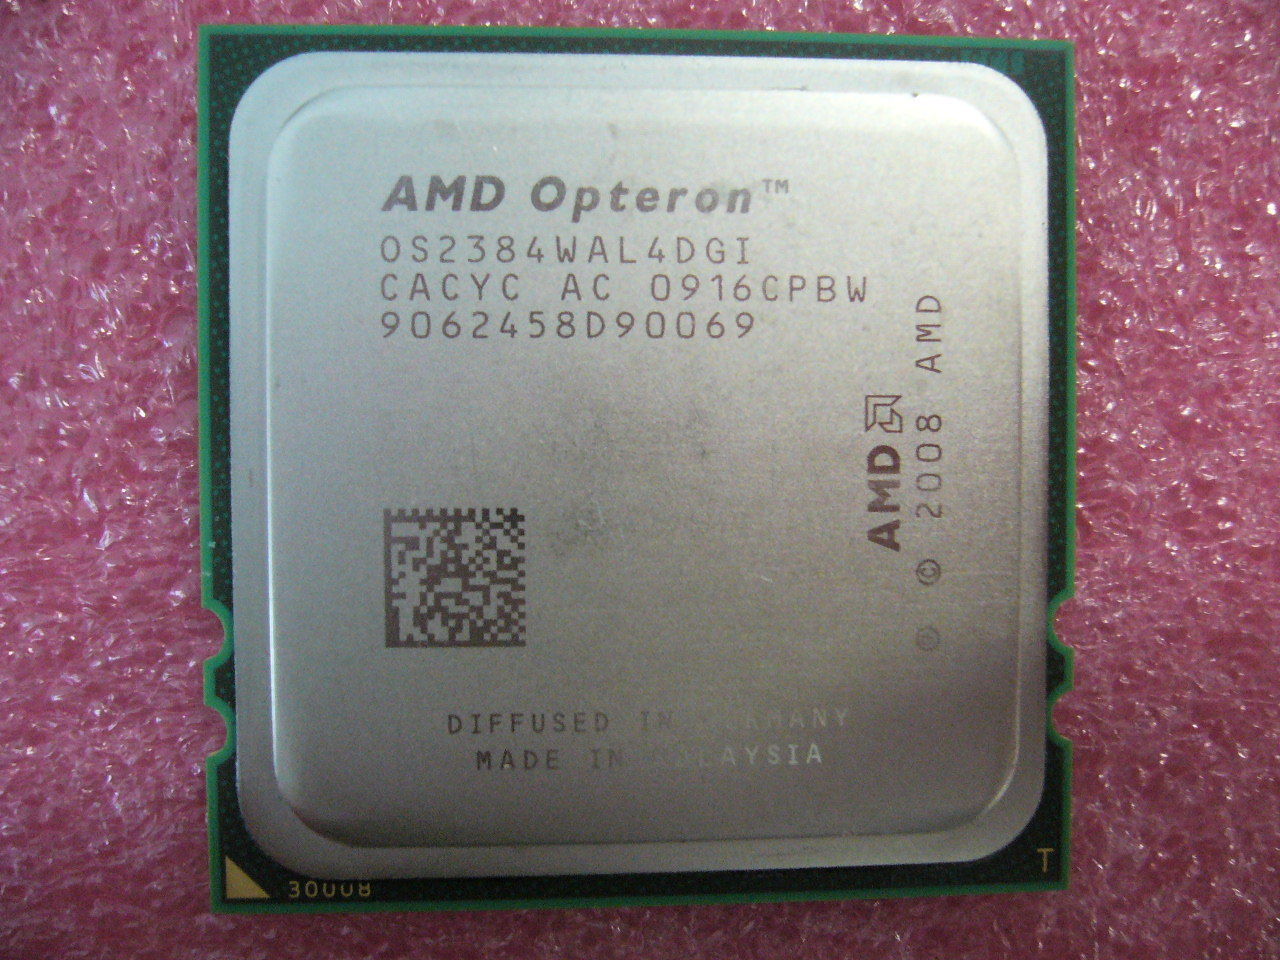 QTY 1x AMD Opteron 2384 2.7 GHz Quad-Core (OS2384WAL4DGI) CPU Socket F 1207 - Click Image to Close